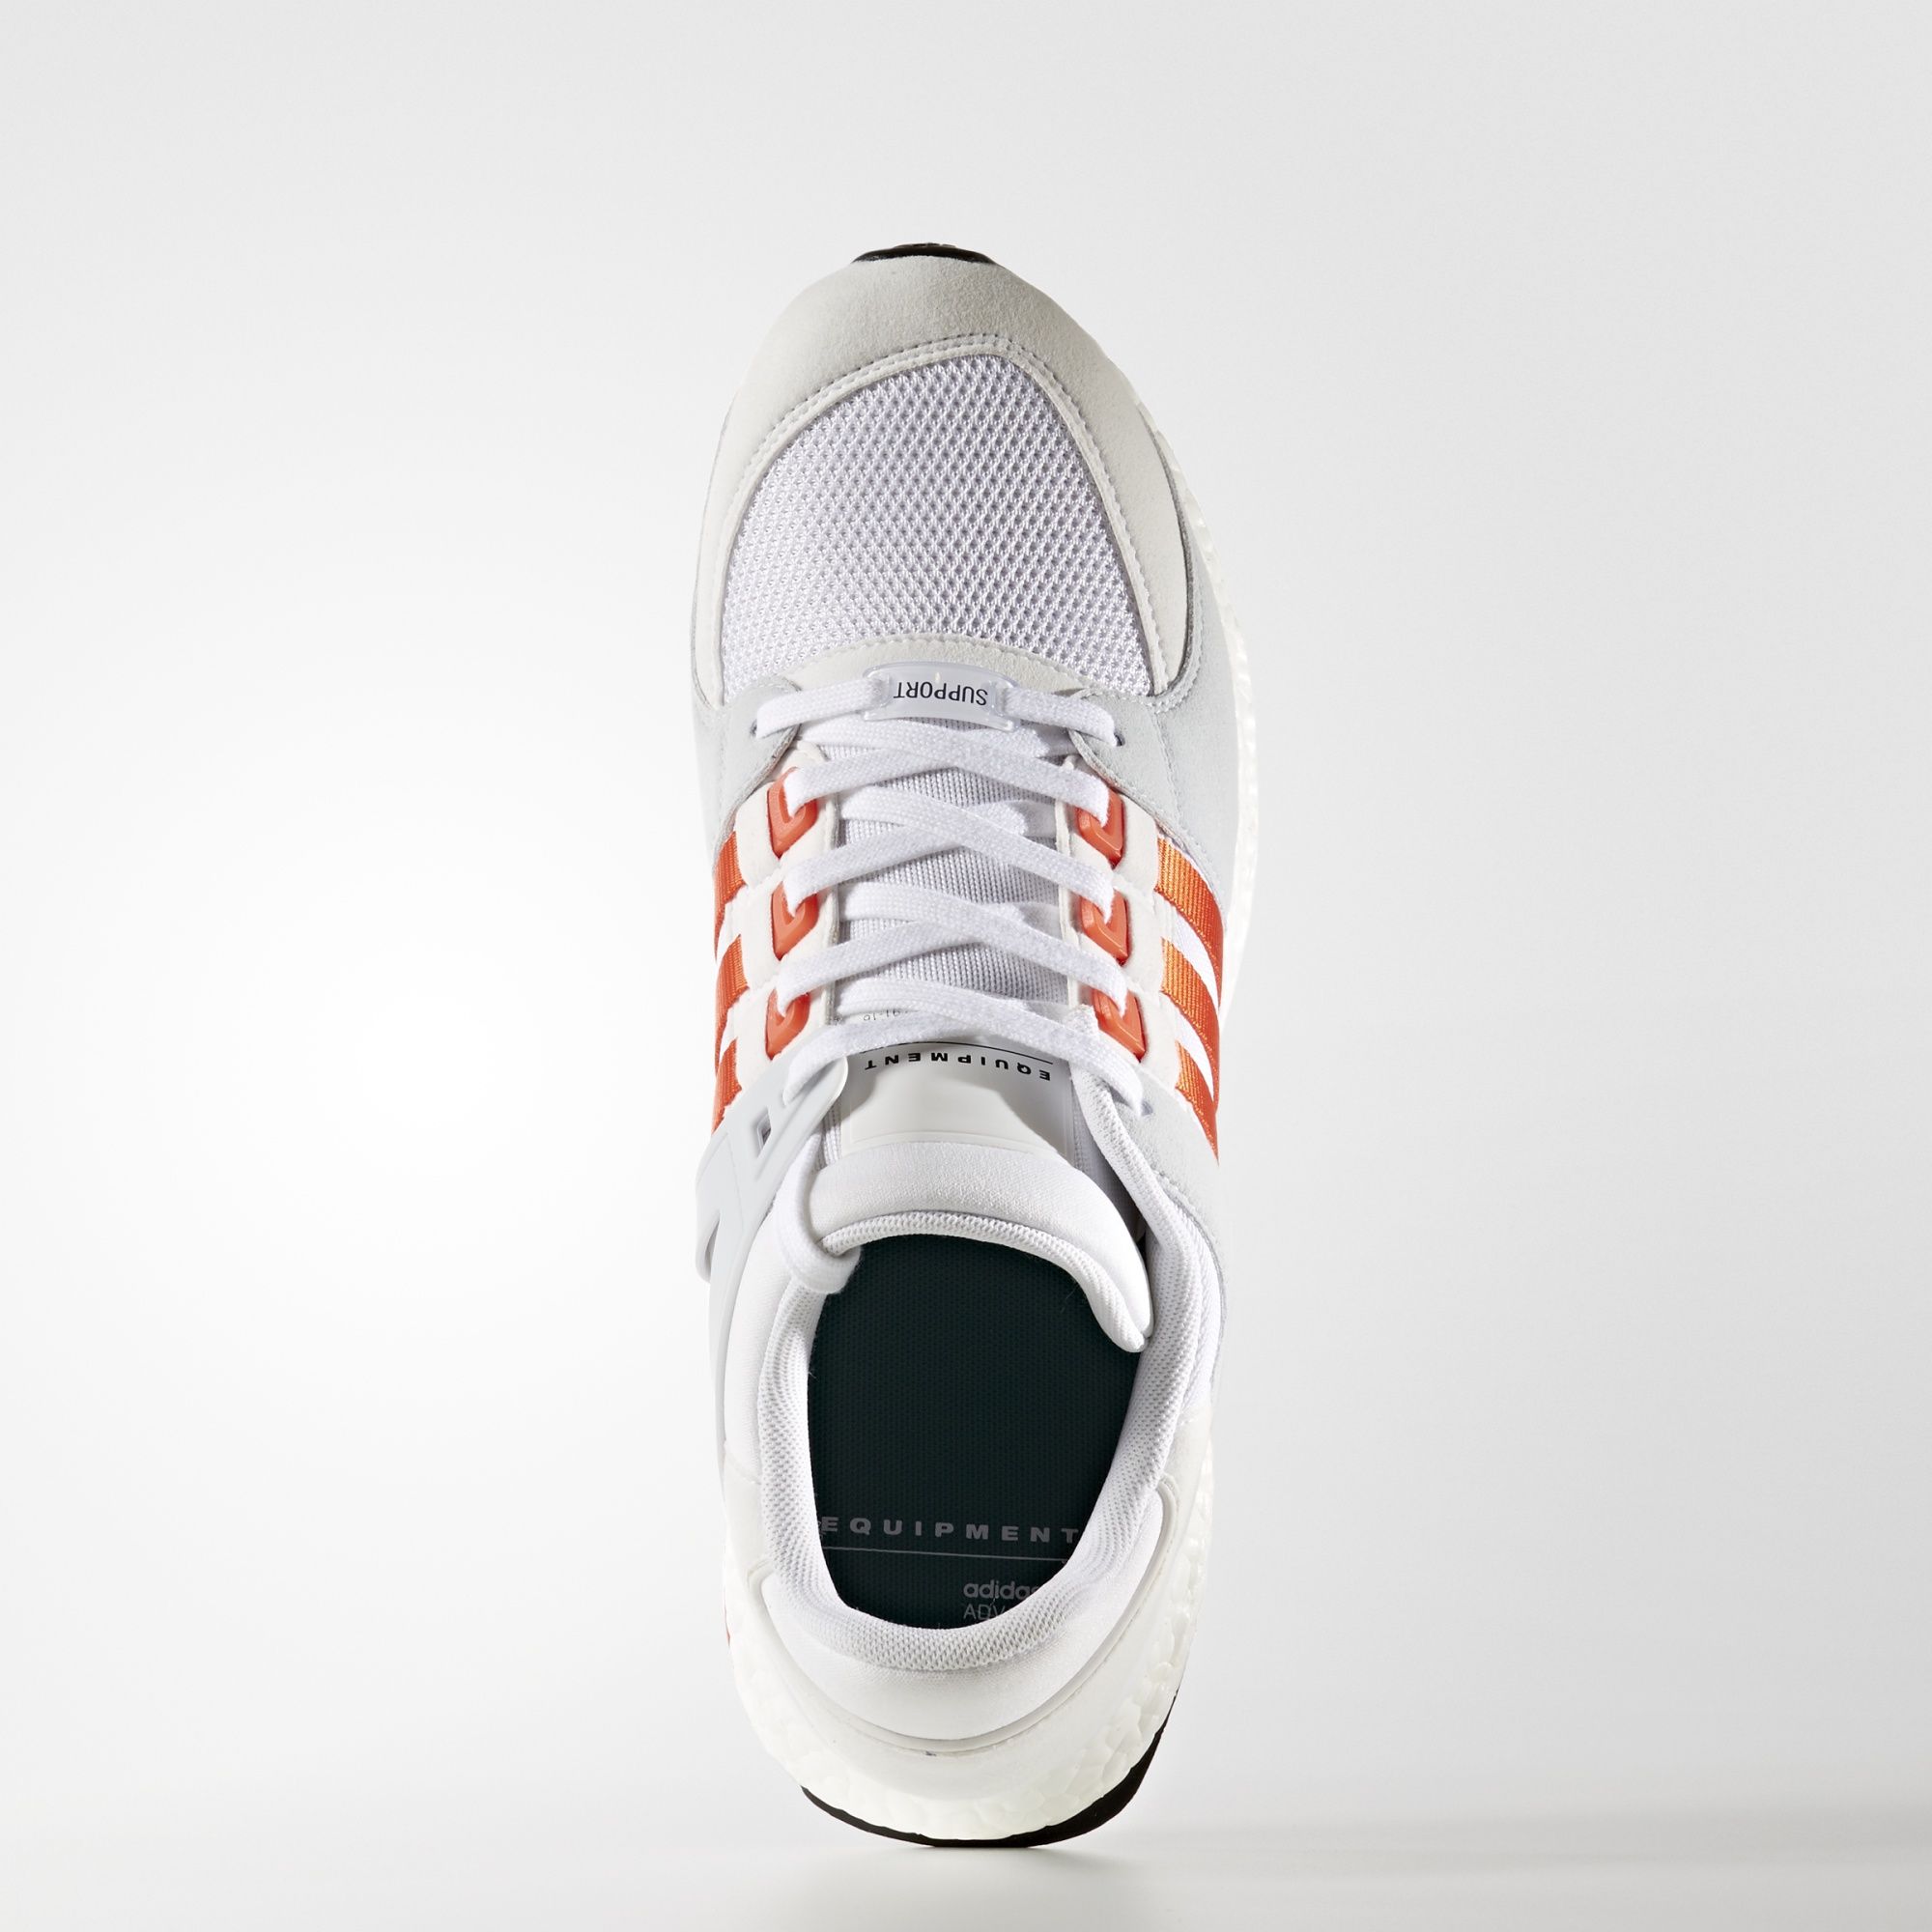 adidas-eqt-support-ultra-boost-white-bold-orange-4